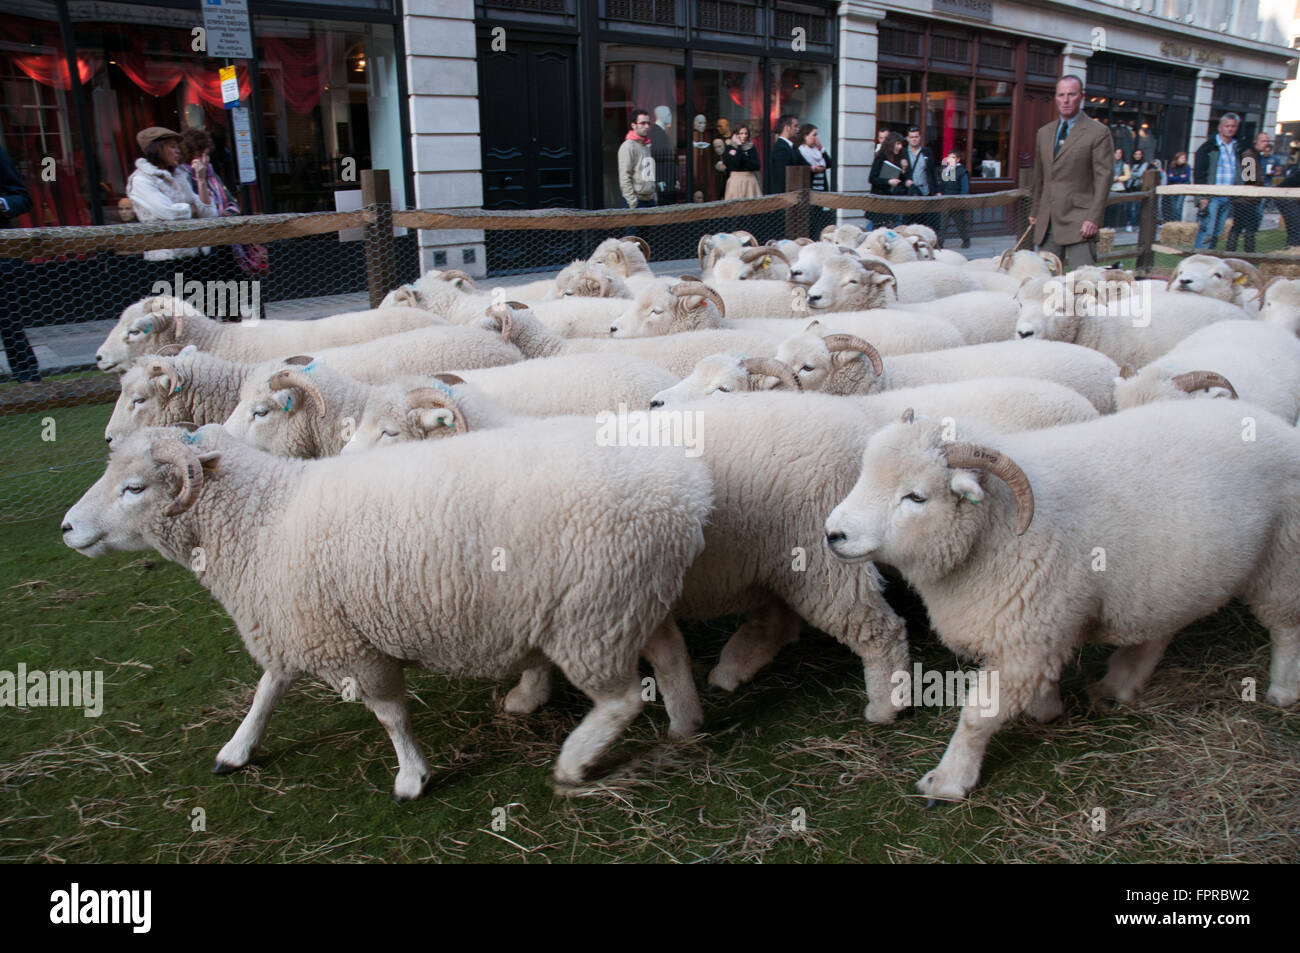 Herds of Sheep in Savile Row London Westminster UK Stock Photo